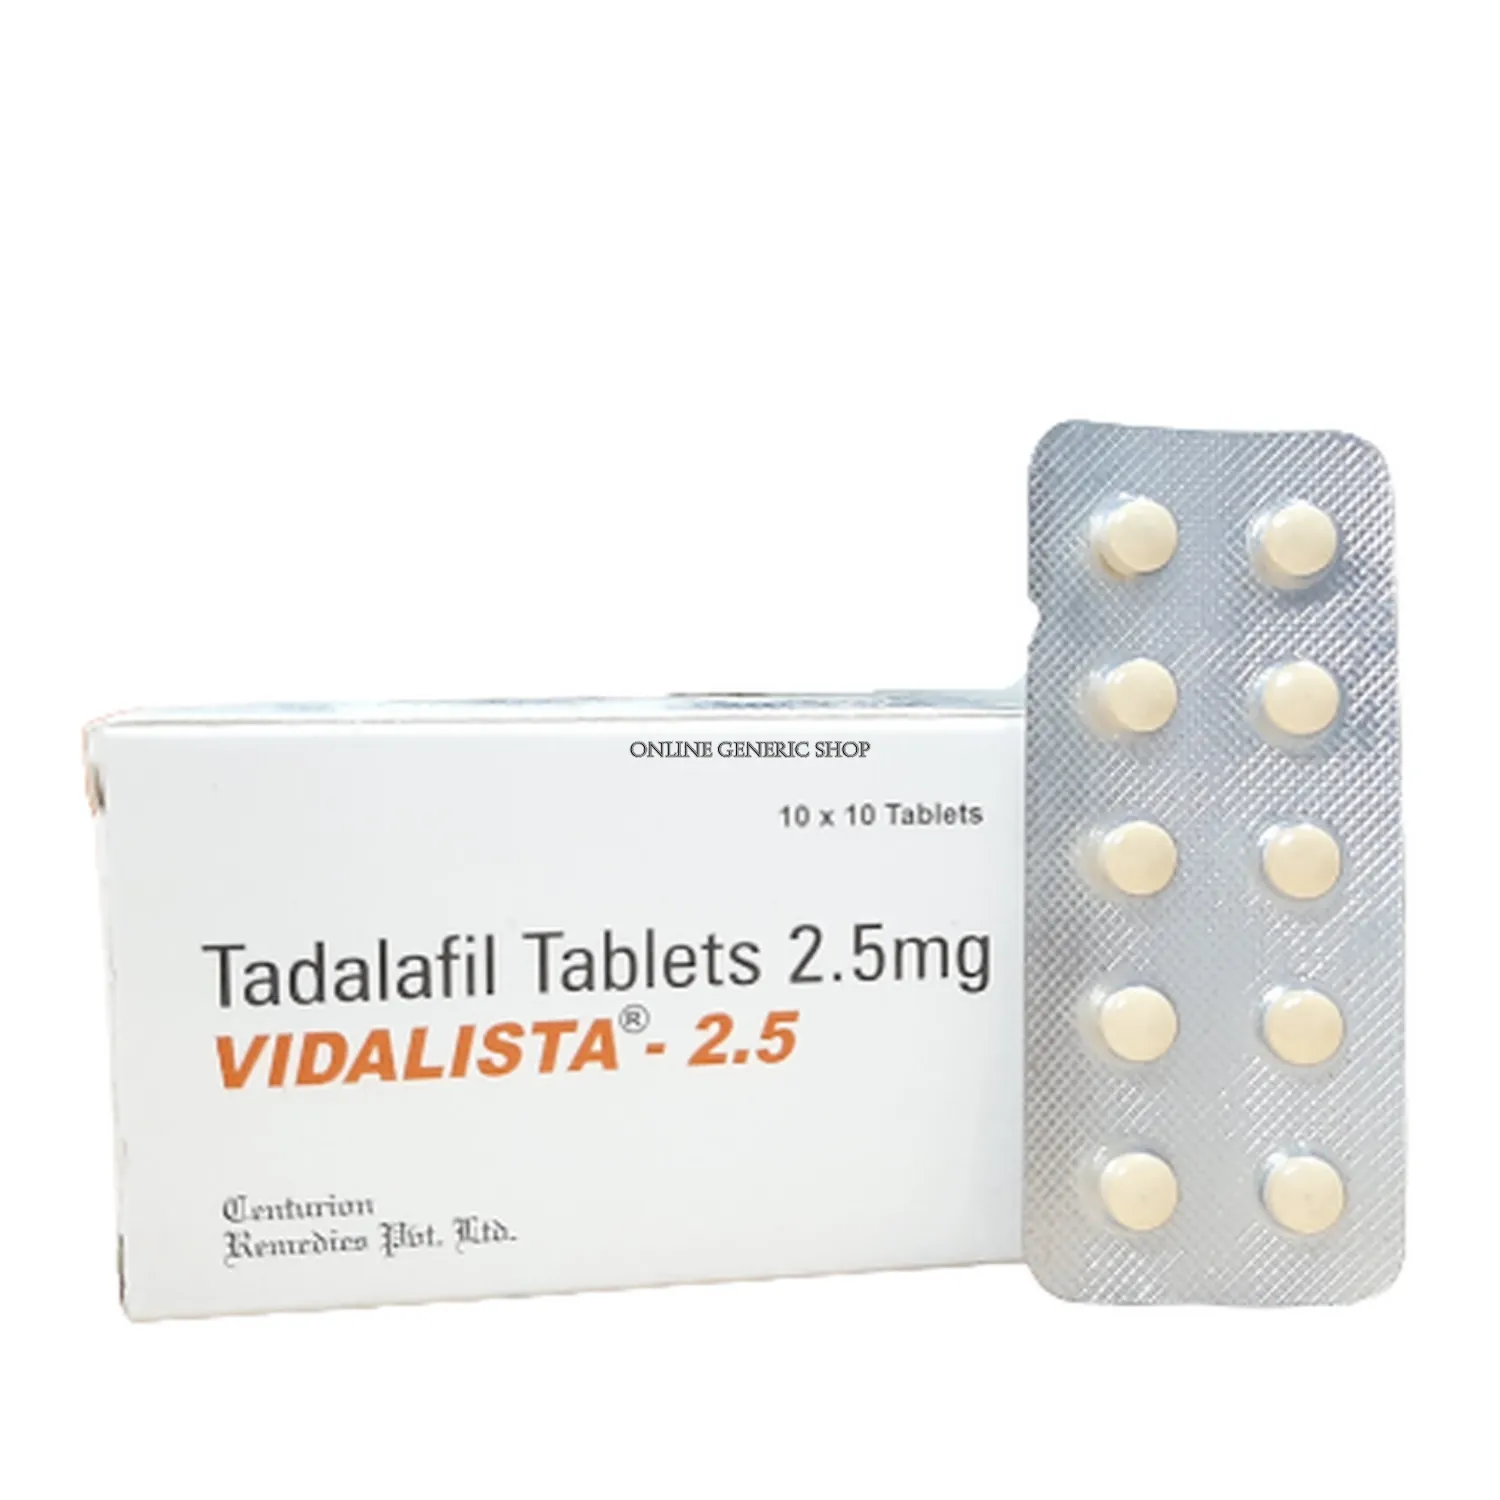 vidalista-2-5-mg                    